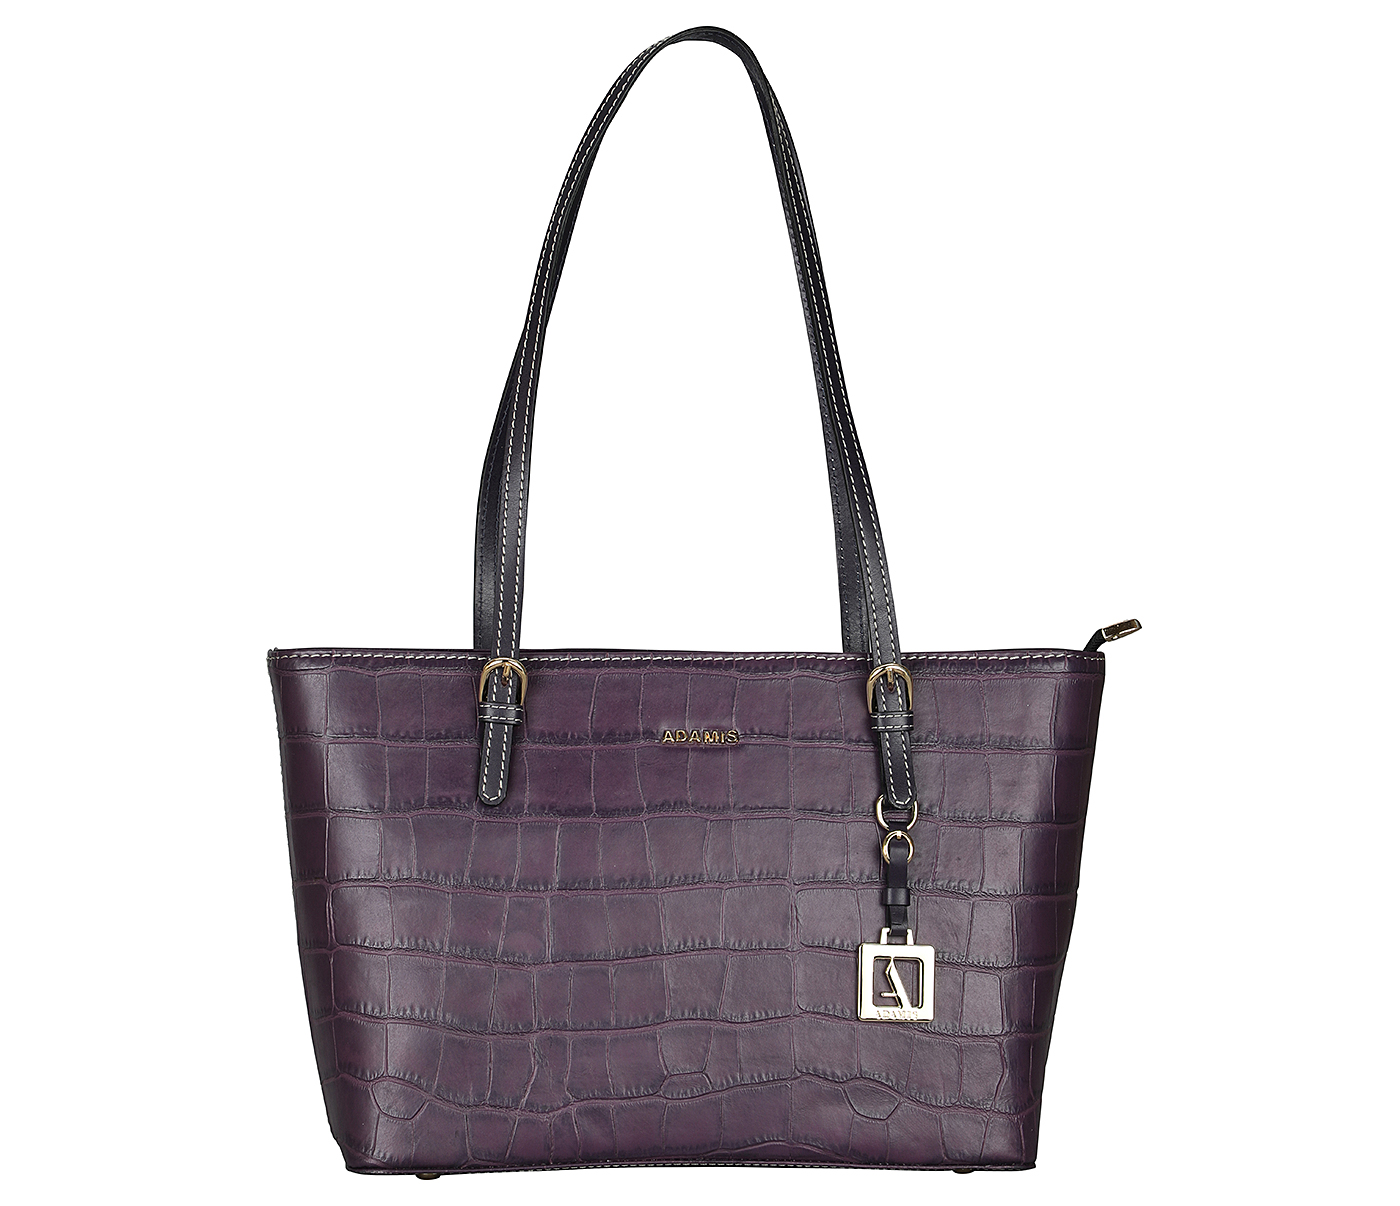 B887-Diana-Shoulder work bag in Genuine Leather - Purple